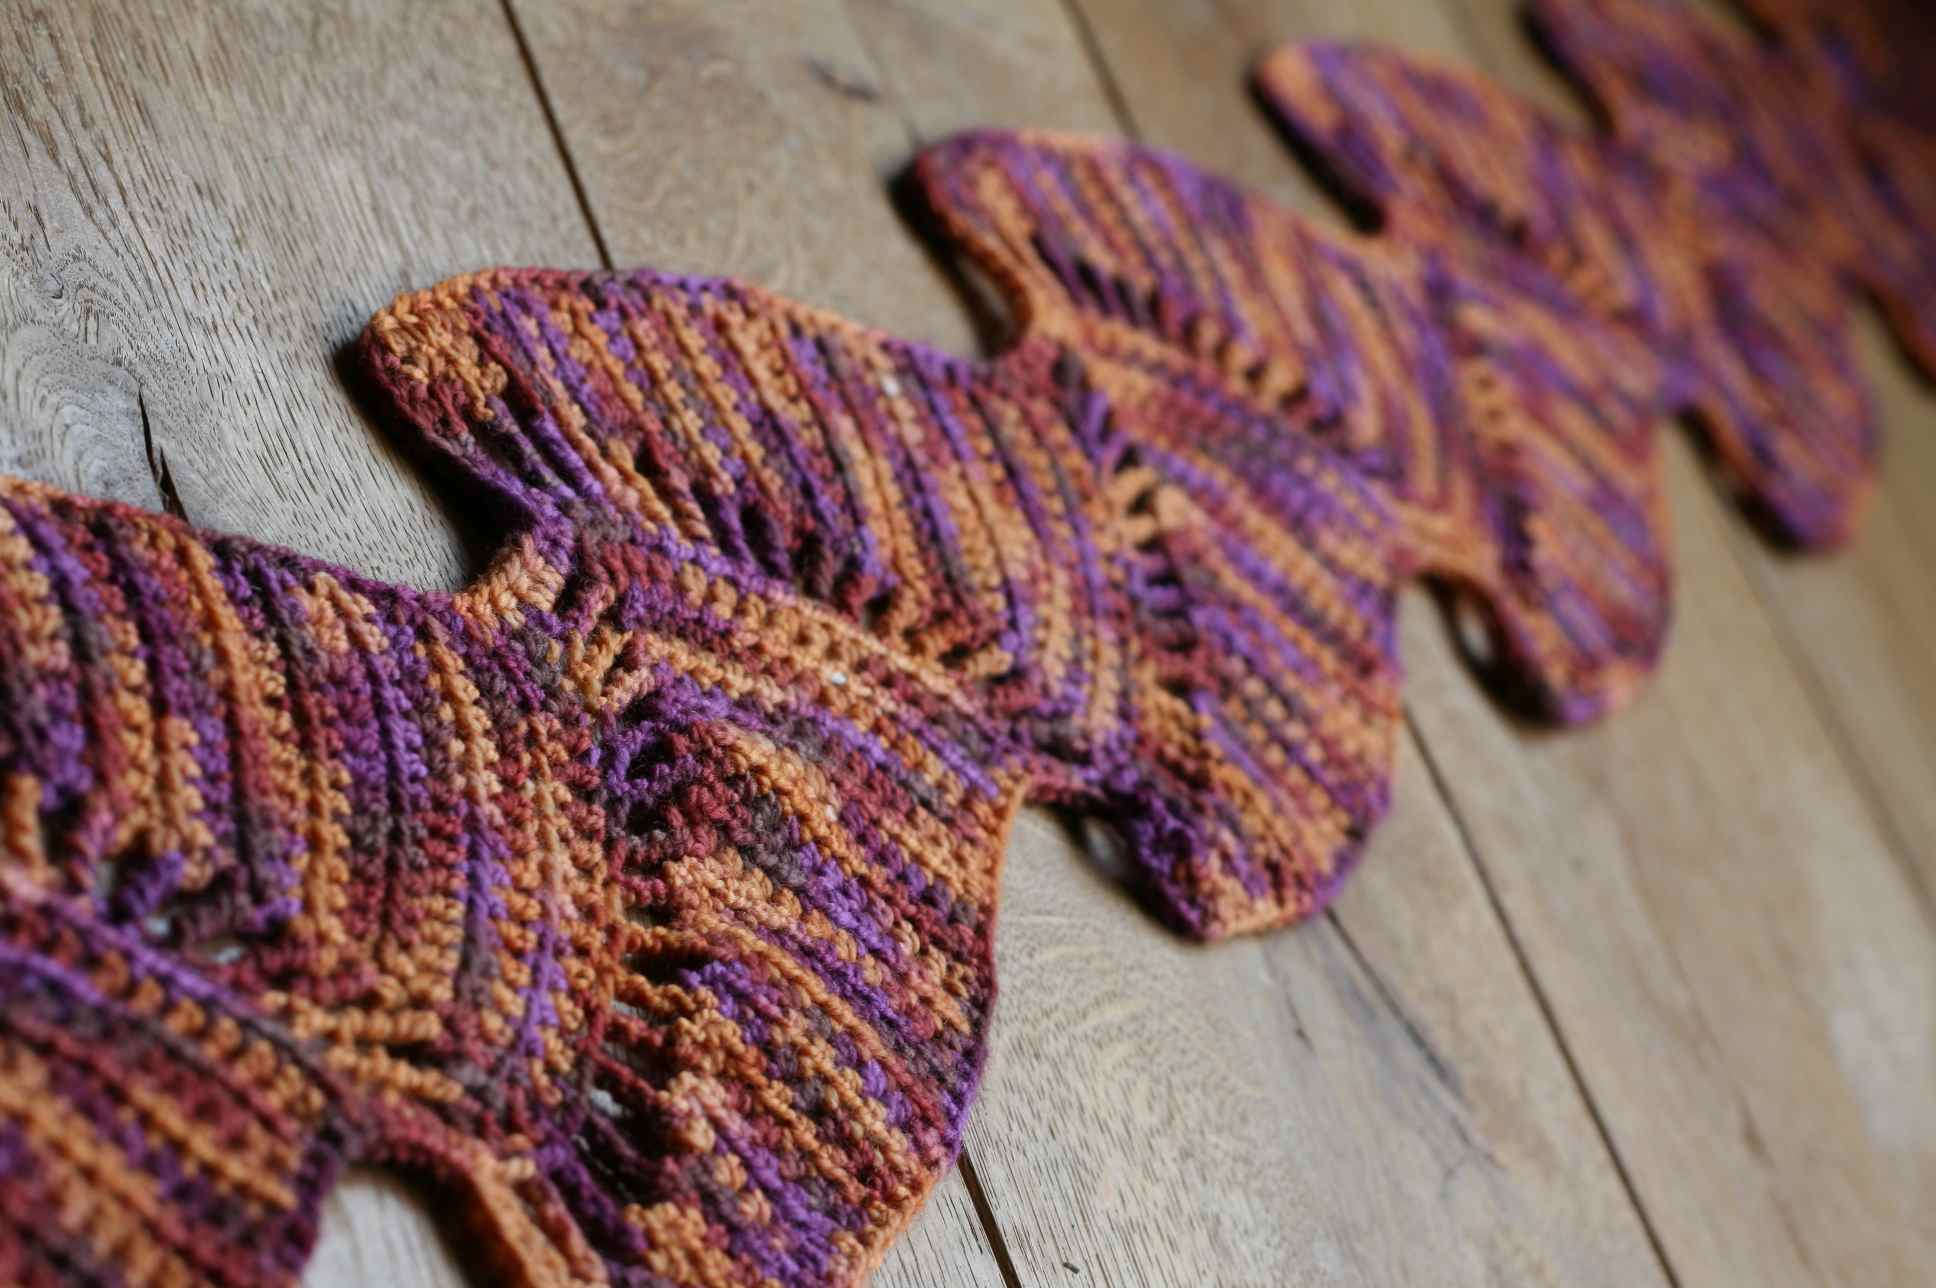 Crochet patterns - Shop for Crochet patterns on ThisNext